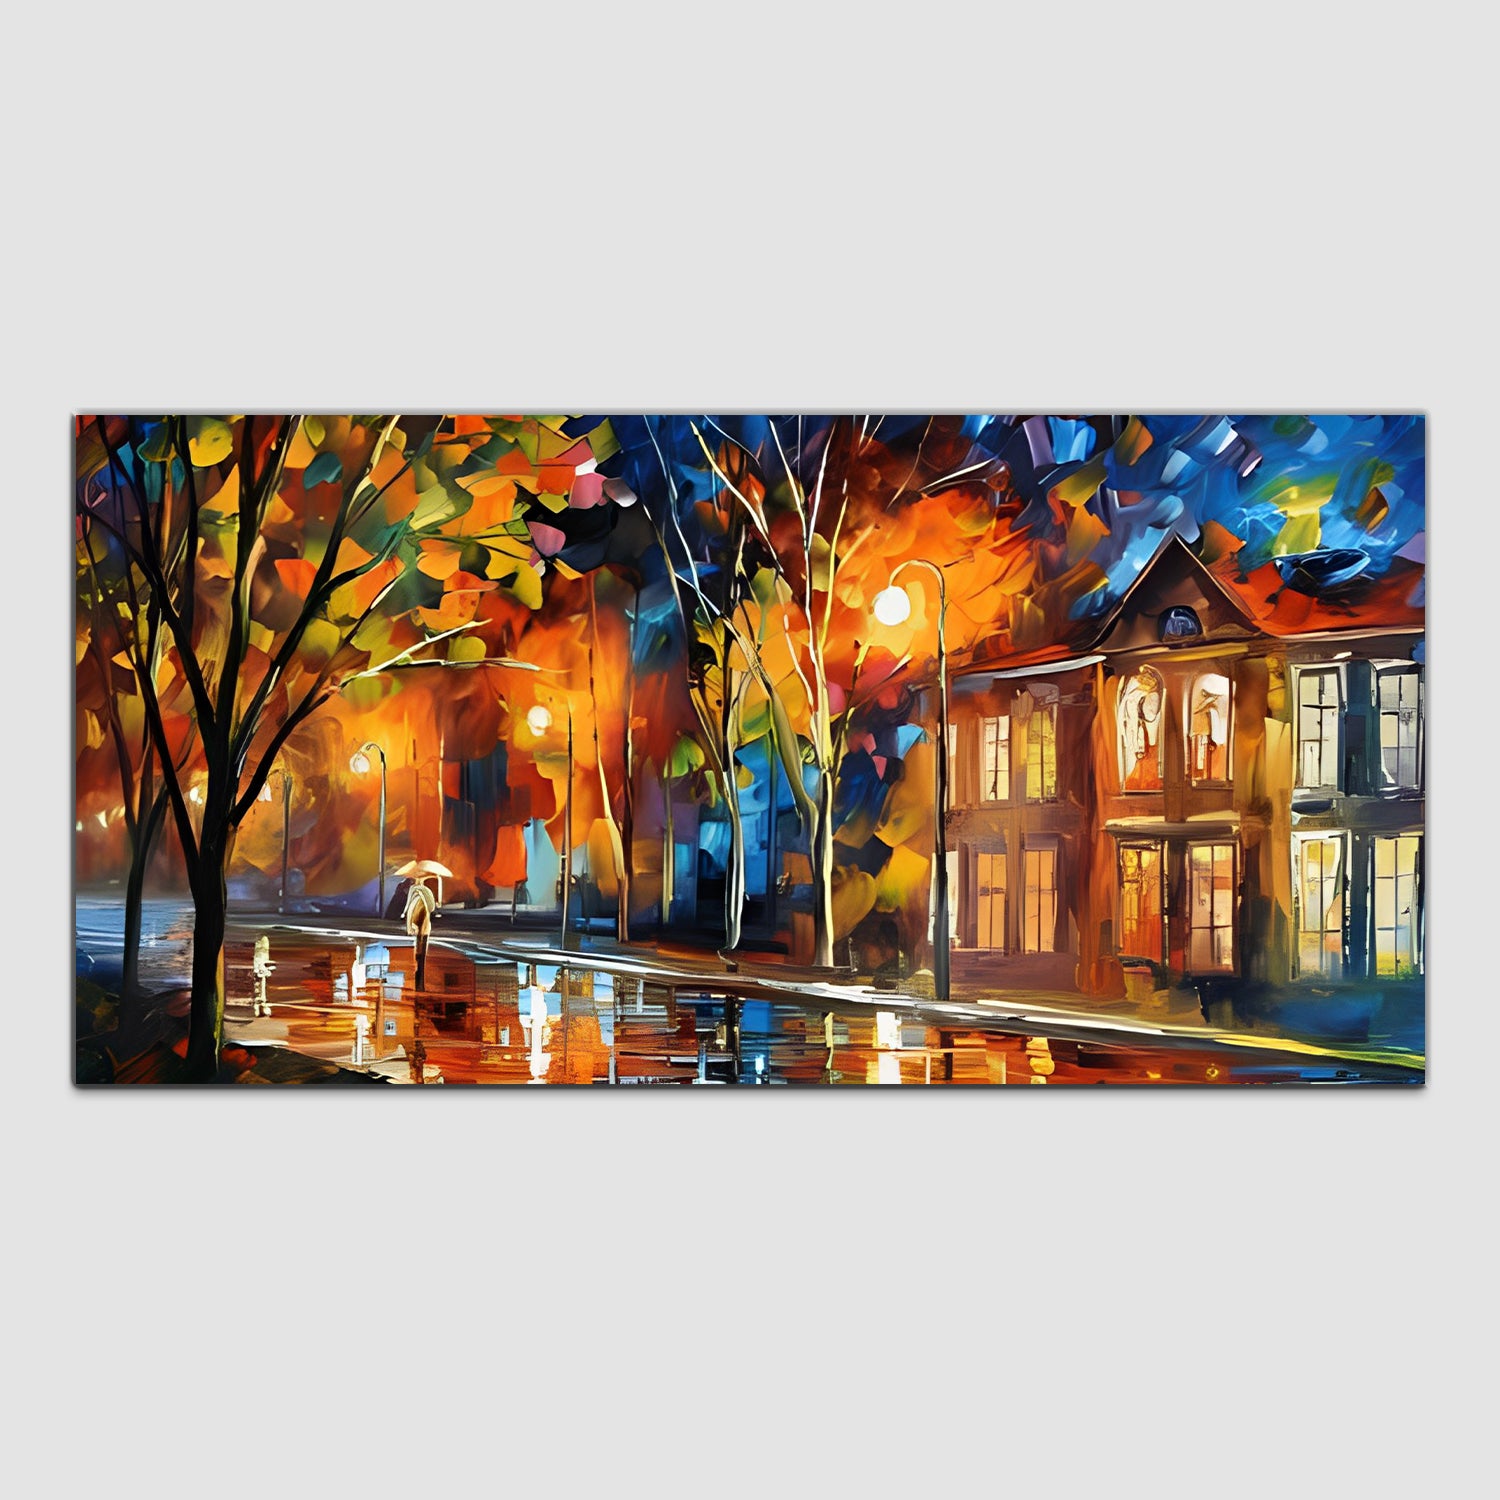 Beautiful Night City multicolor Canvas Art Wall Painting